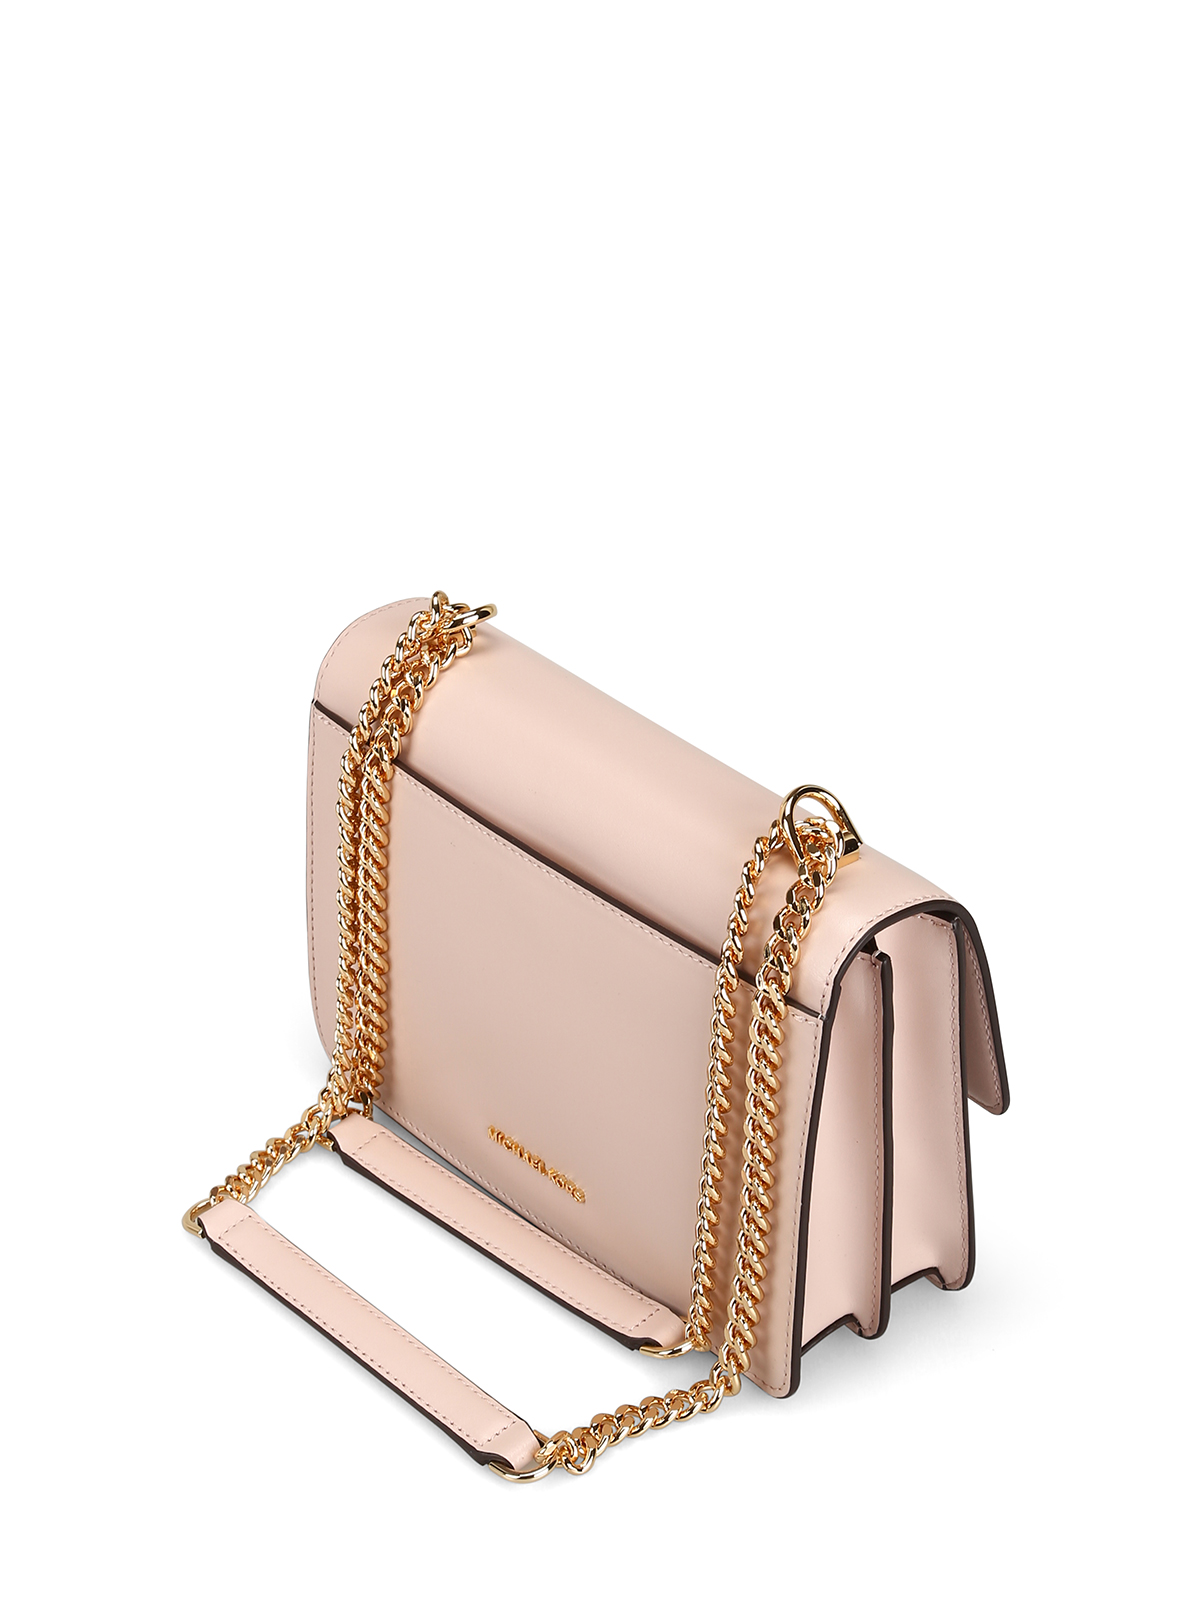 Michael Kors Savannah Small Pale Pink Saffiano Leather Satchel Bag